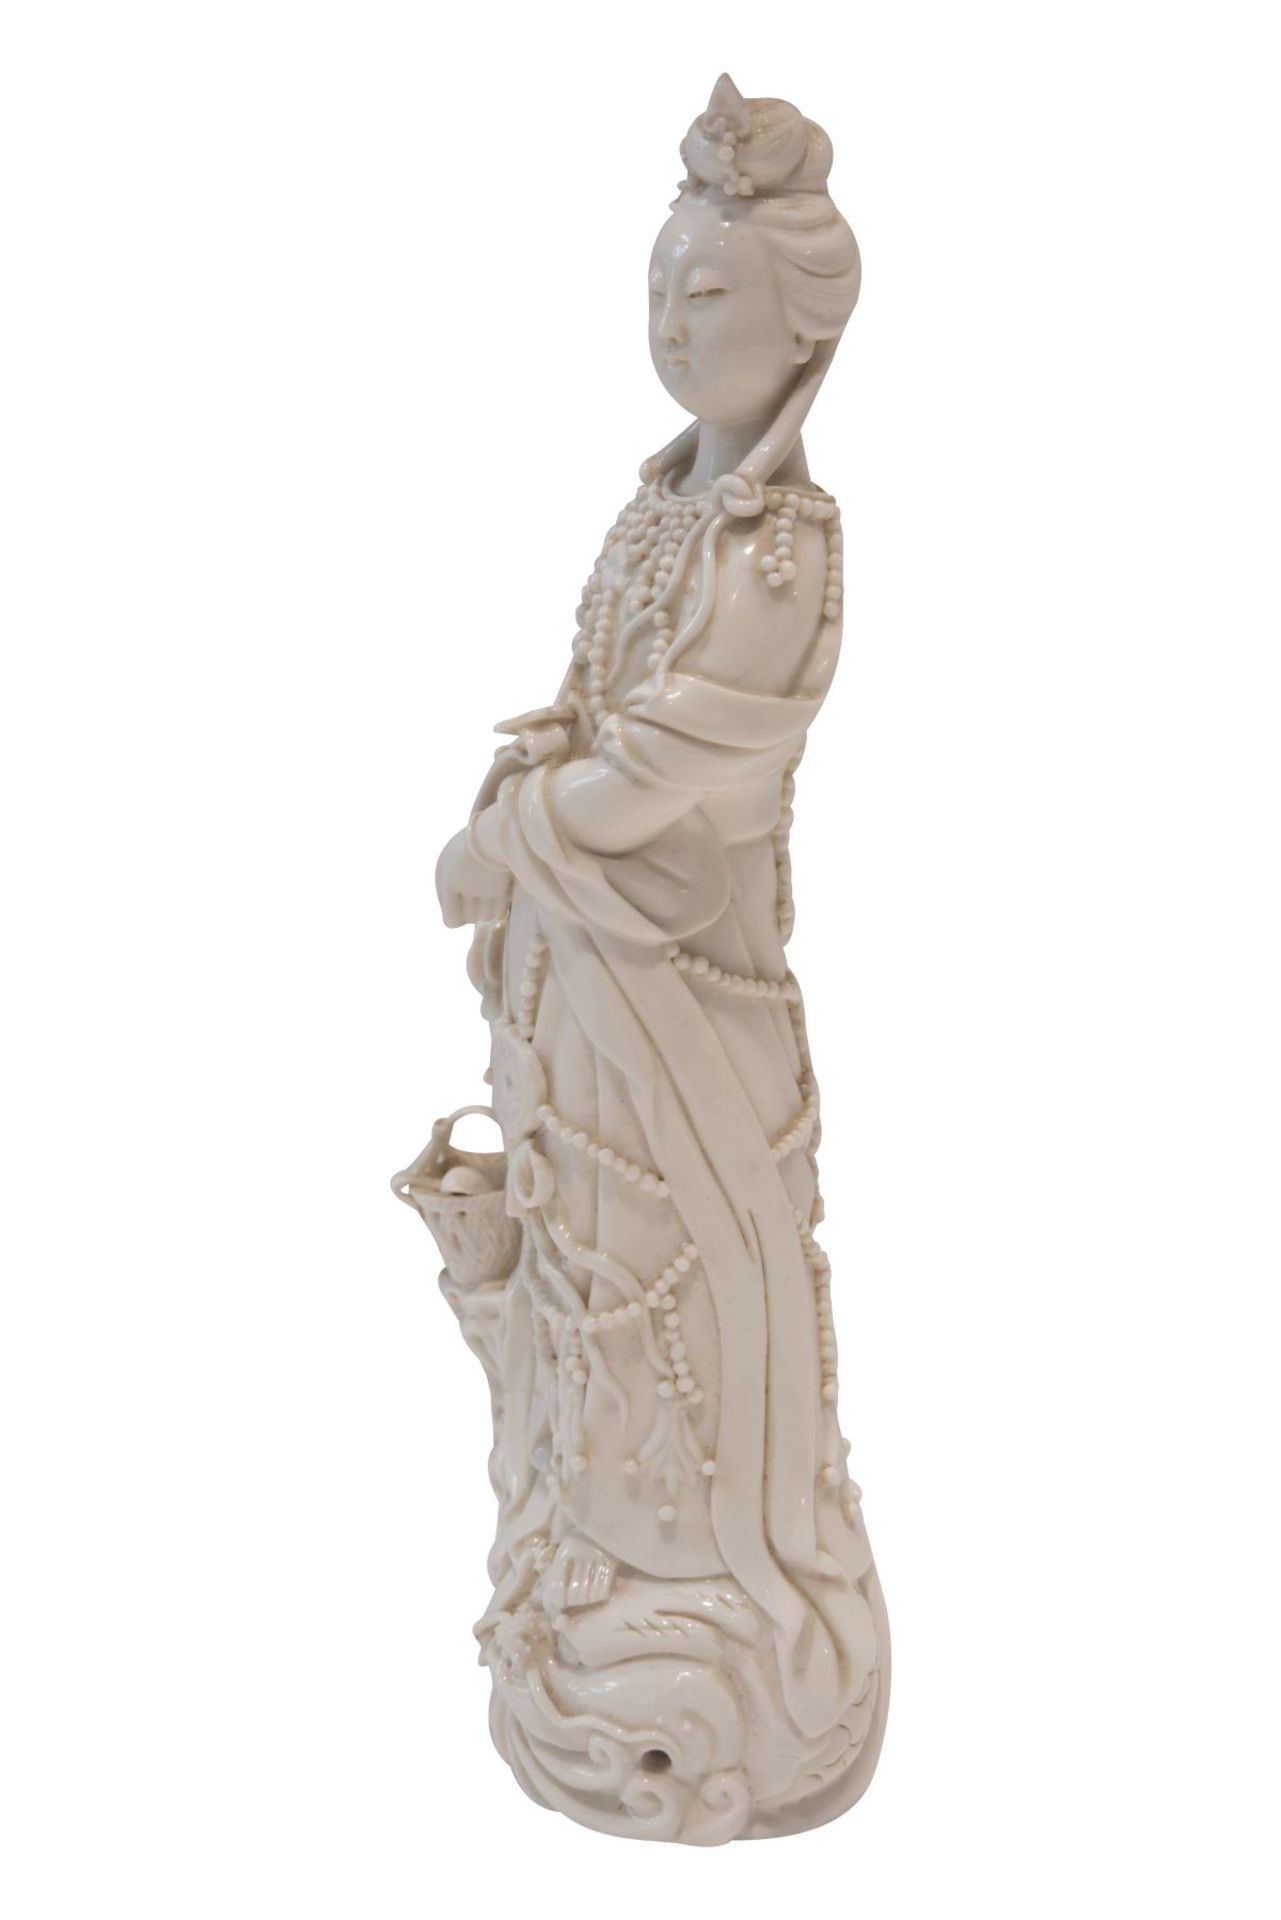 Blanc de Chine "Guanyin", porcelain figure - Image 2 of 6